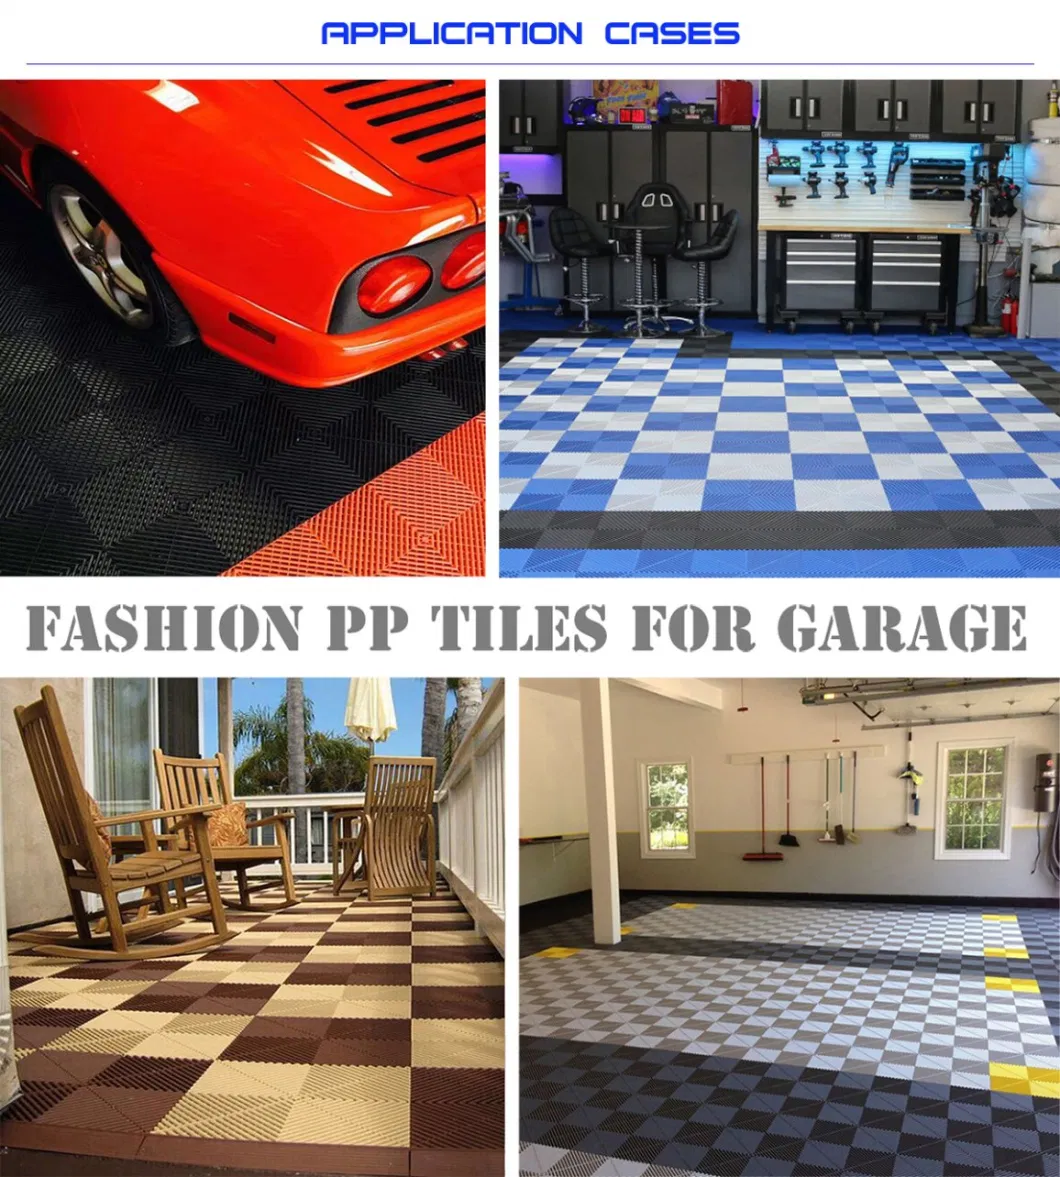 Mat Modular Durable Interlocking Cushion Garage Tiles, PP Anti-Slip Flooring Snap Together Drainage Mats for Outdoor Indoor (light gray)